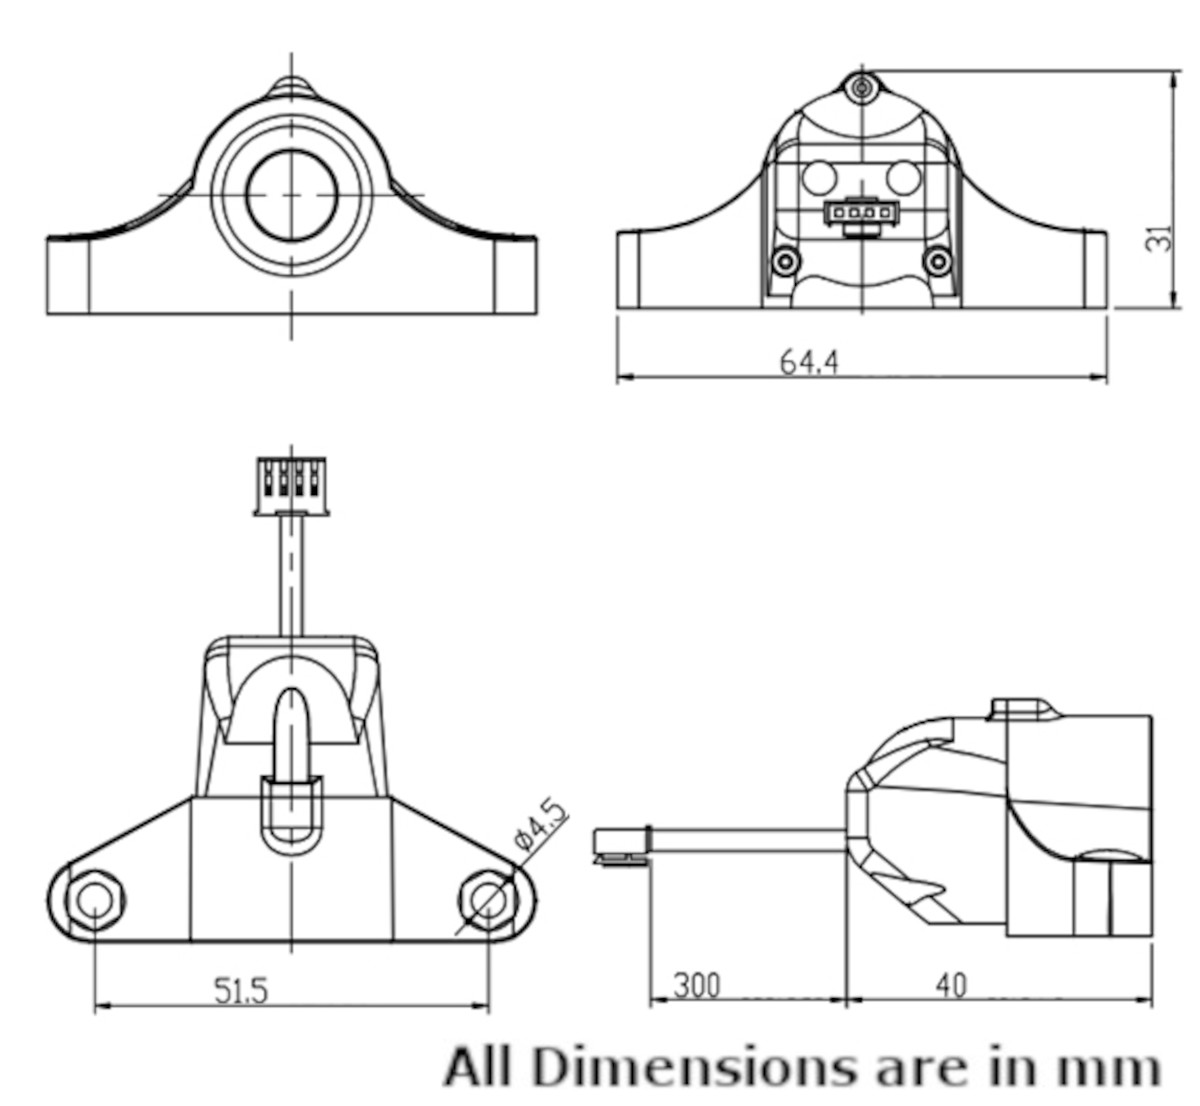 PB-A10 Ultrasonic Distance Sensor Dimensions